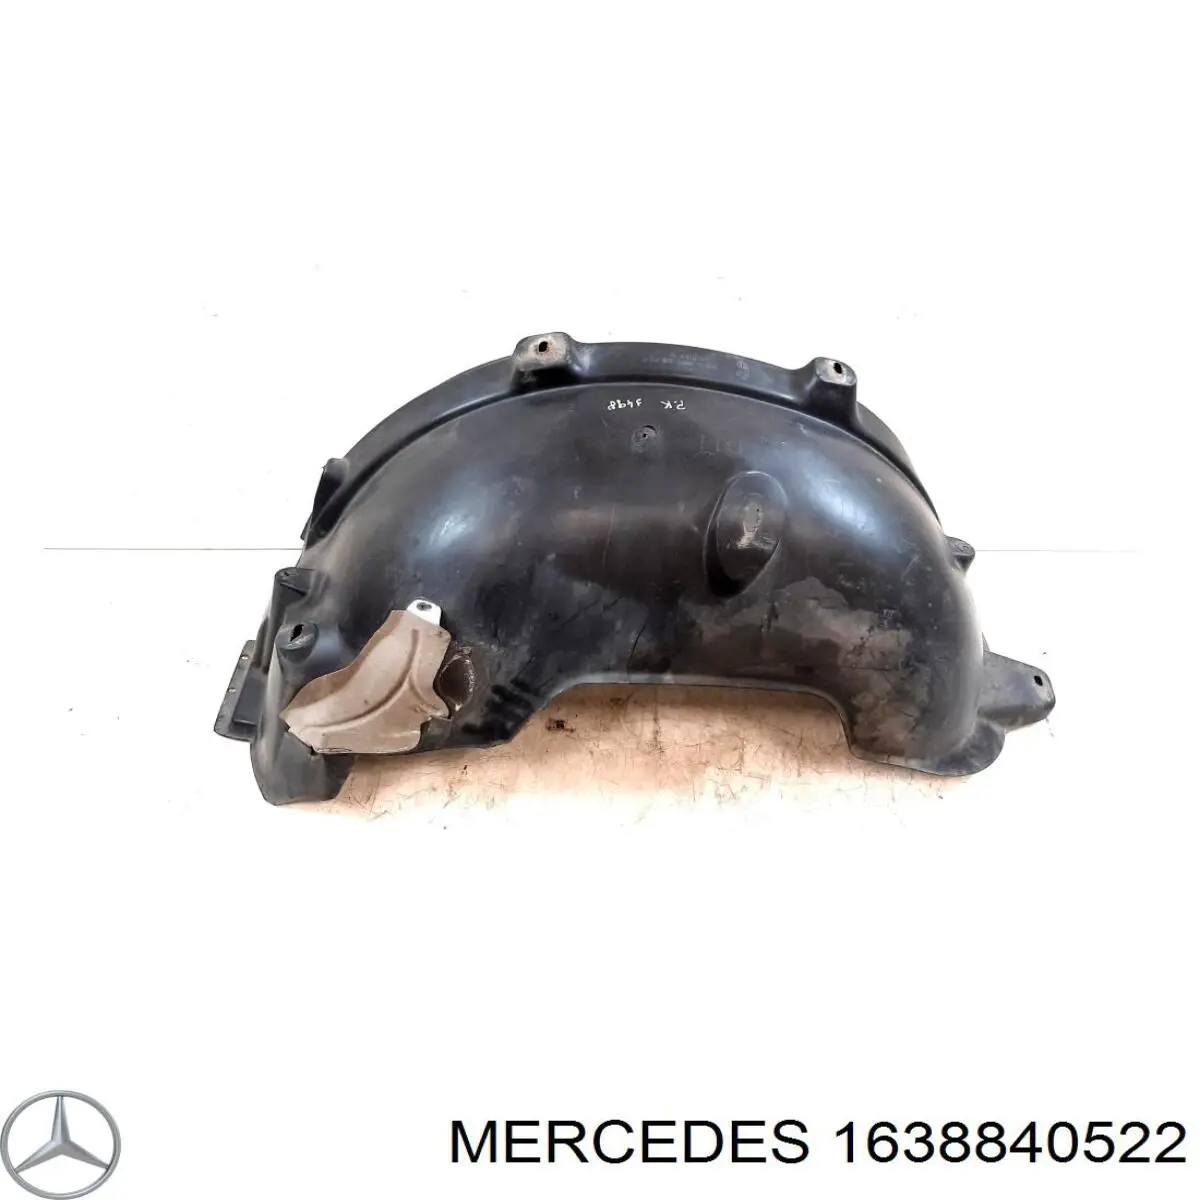 Подкрылок передний левый Мерседес-бенц МЛ/ГЛЕ W163 (Mercedes ML/GLE)